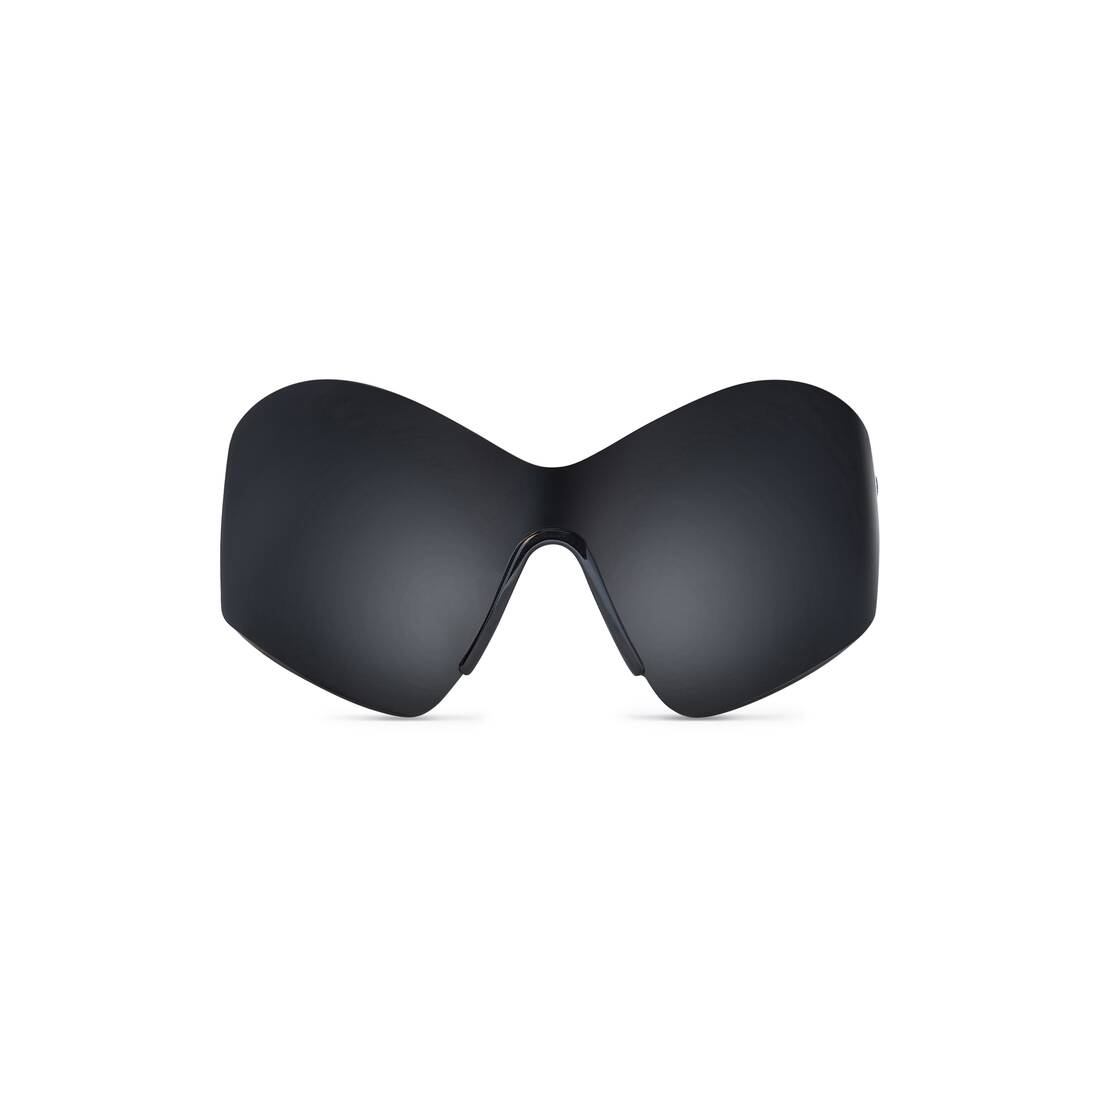 Buy Balenciaga sunglasses  glasses online  shipped worldwide